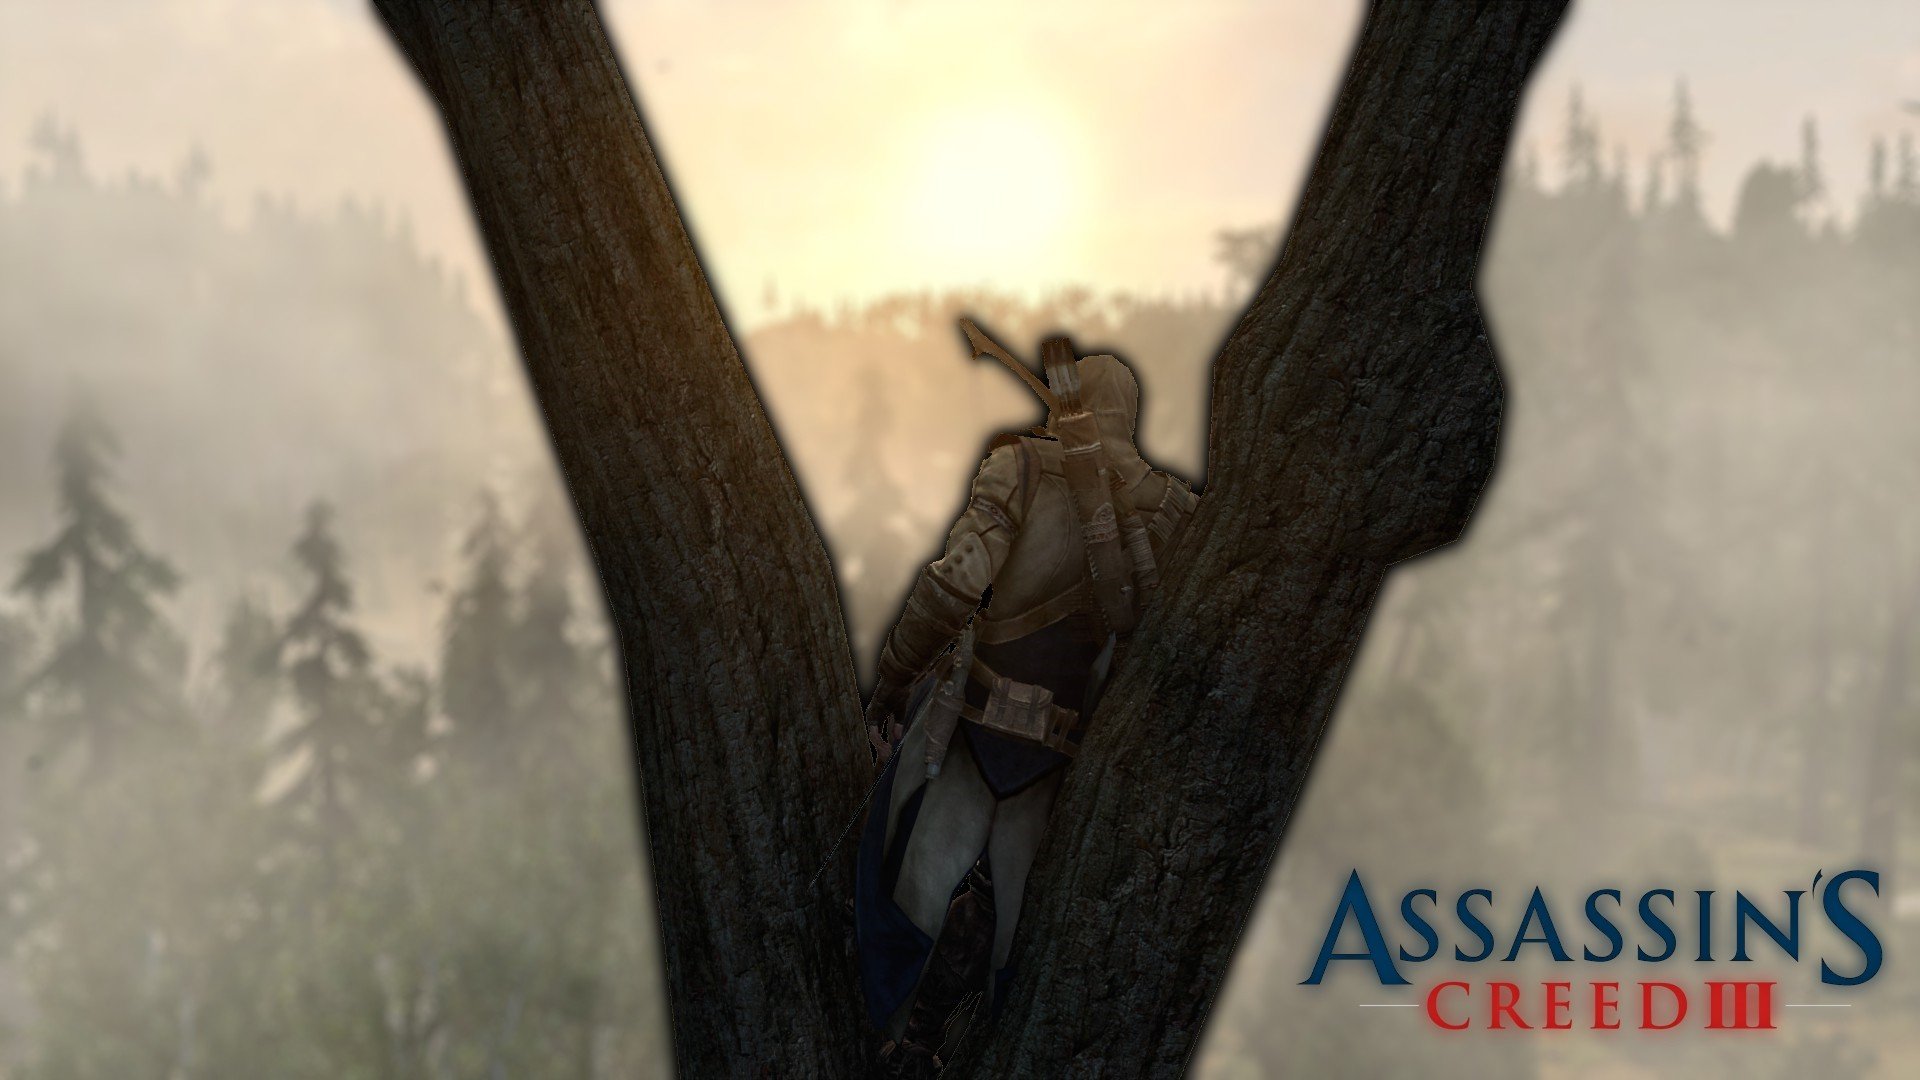 Assassin&039;s Creed, Pine trees, Sun rays Wallpaper